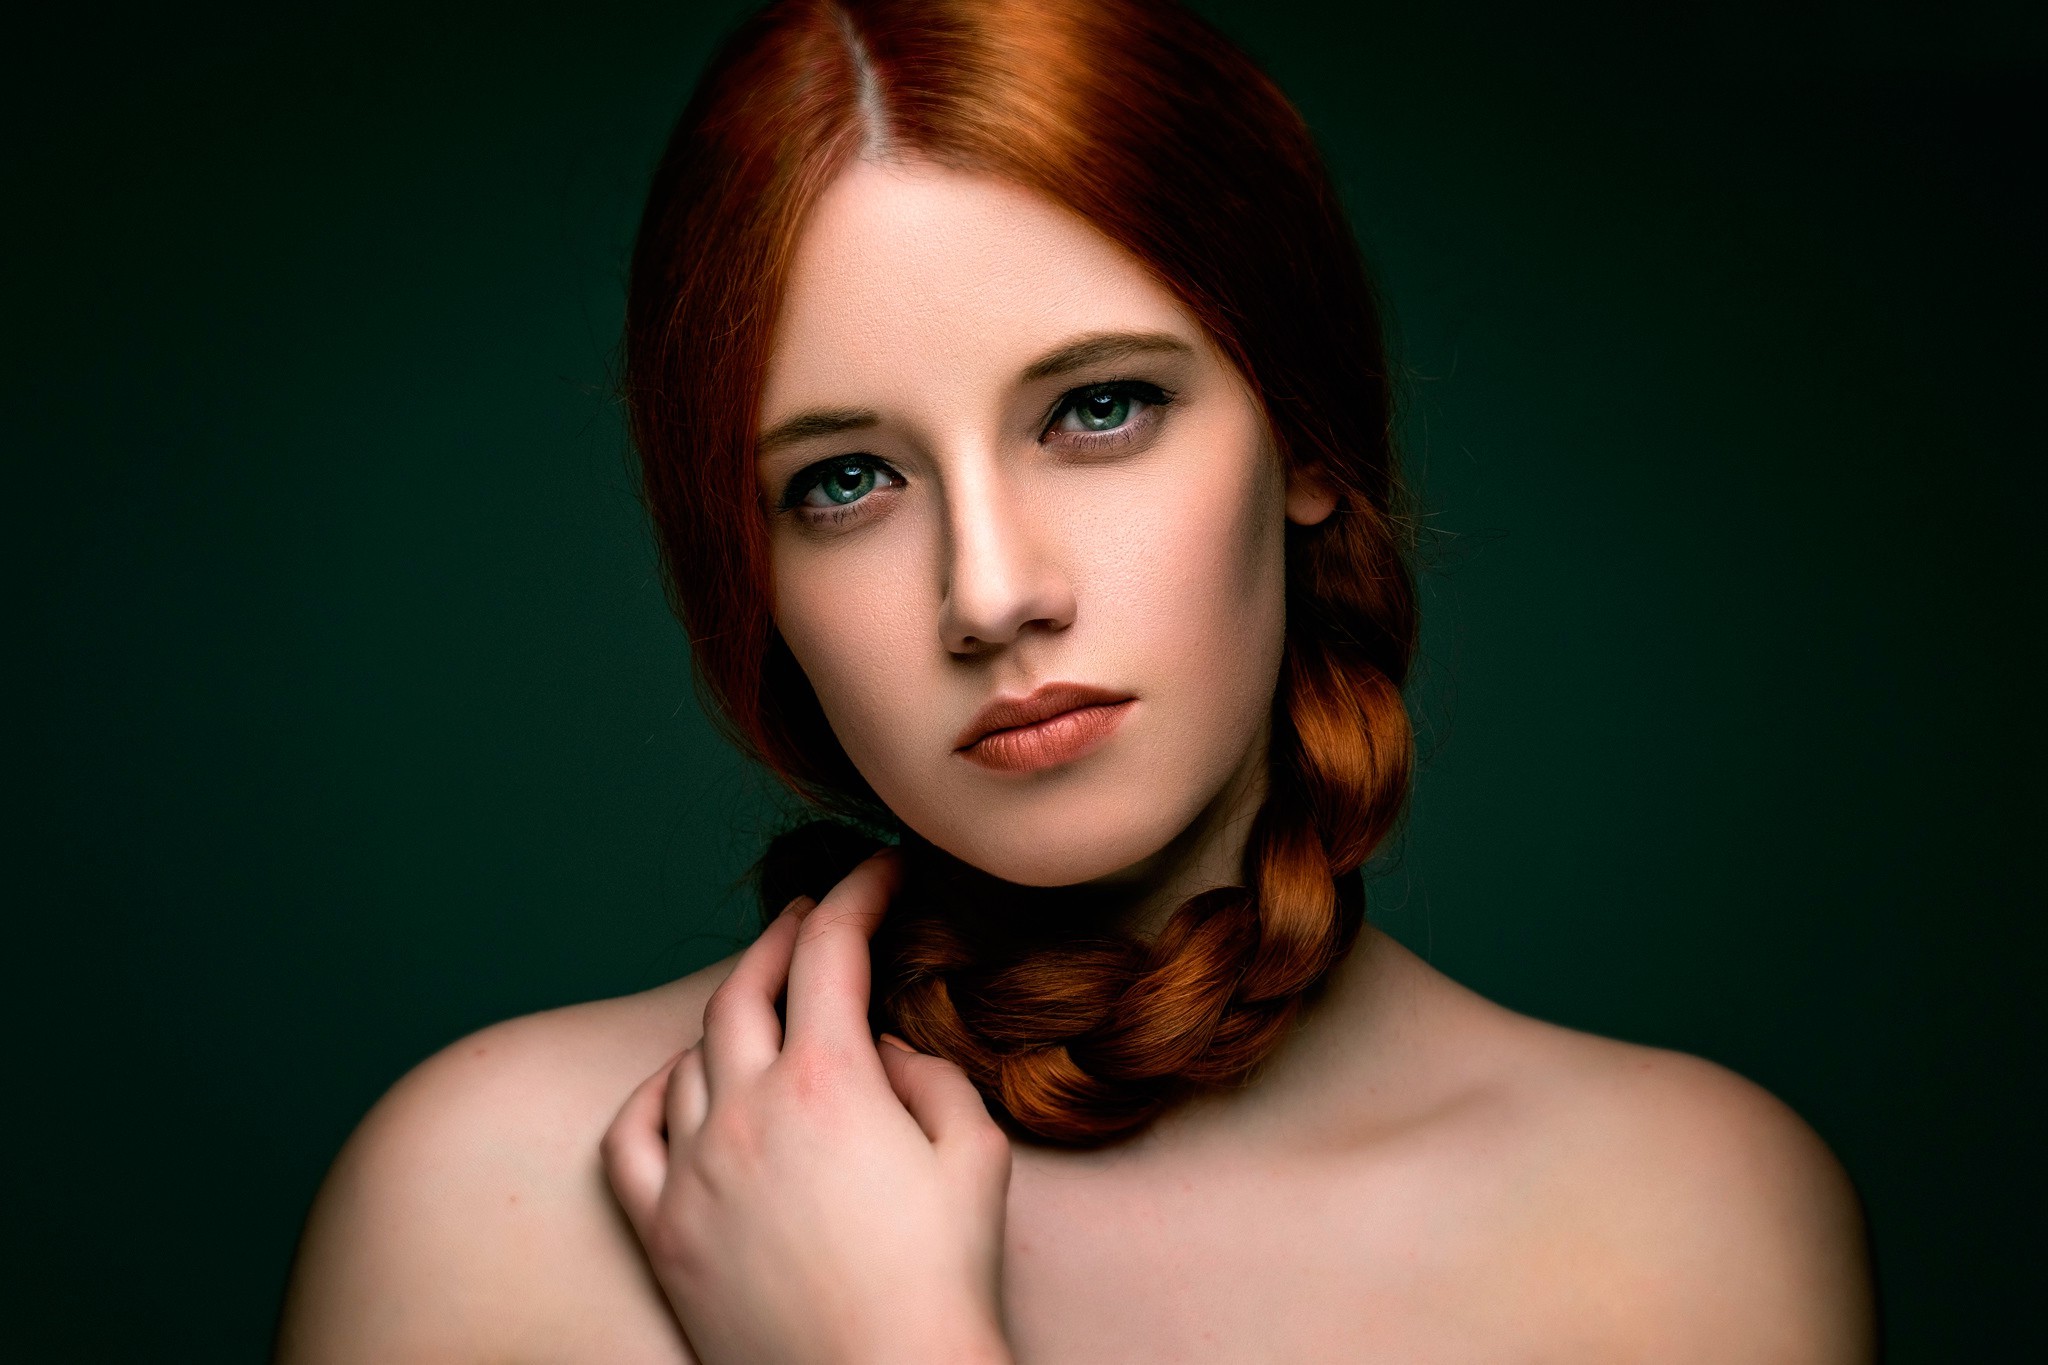 Face Women Redhead Model Portrait Wallpapers Hd Desktop And Mobile Backgrounds Sexiezpicz Web Porn 